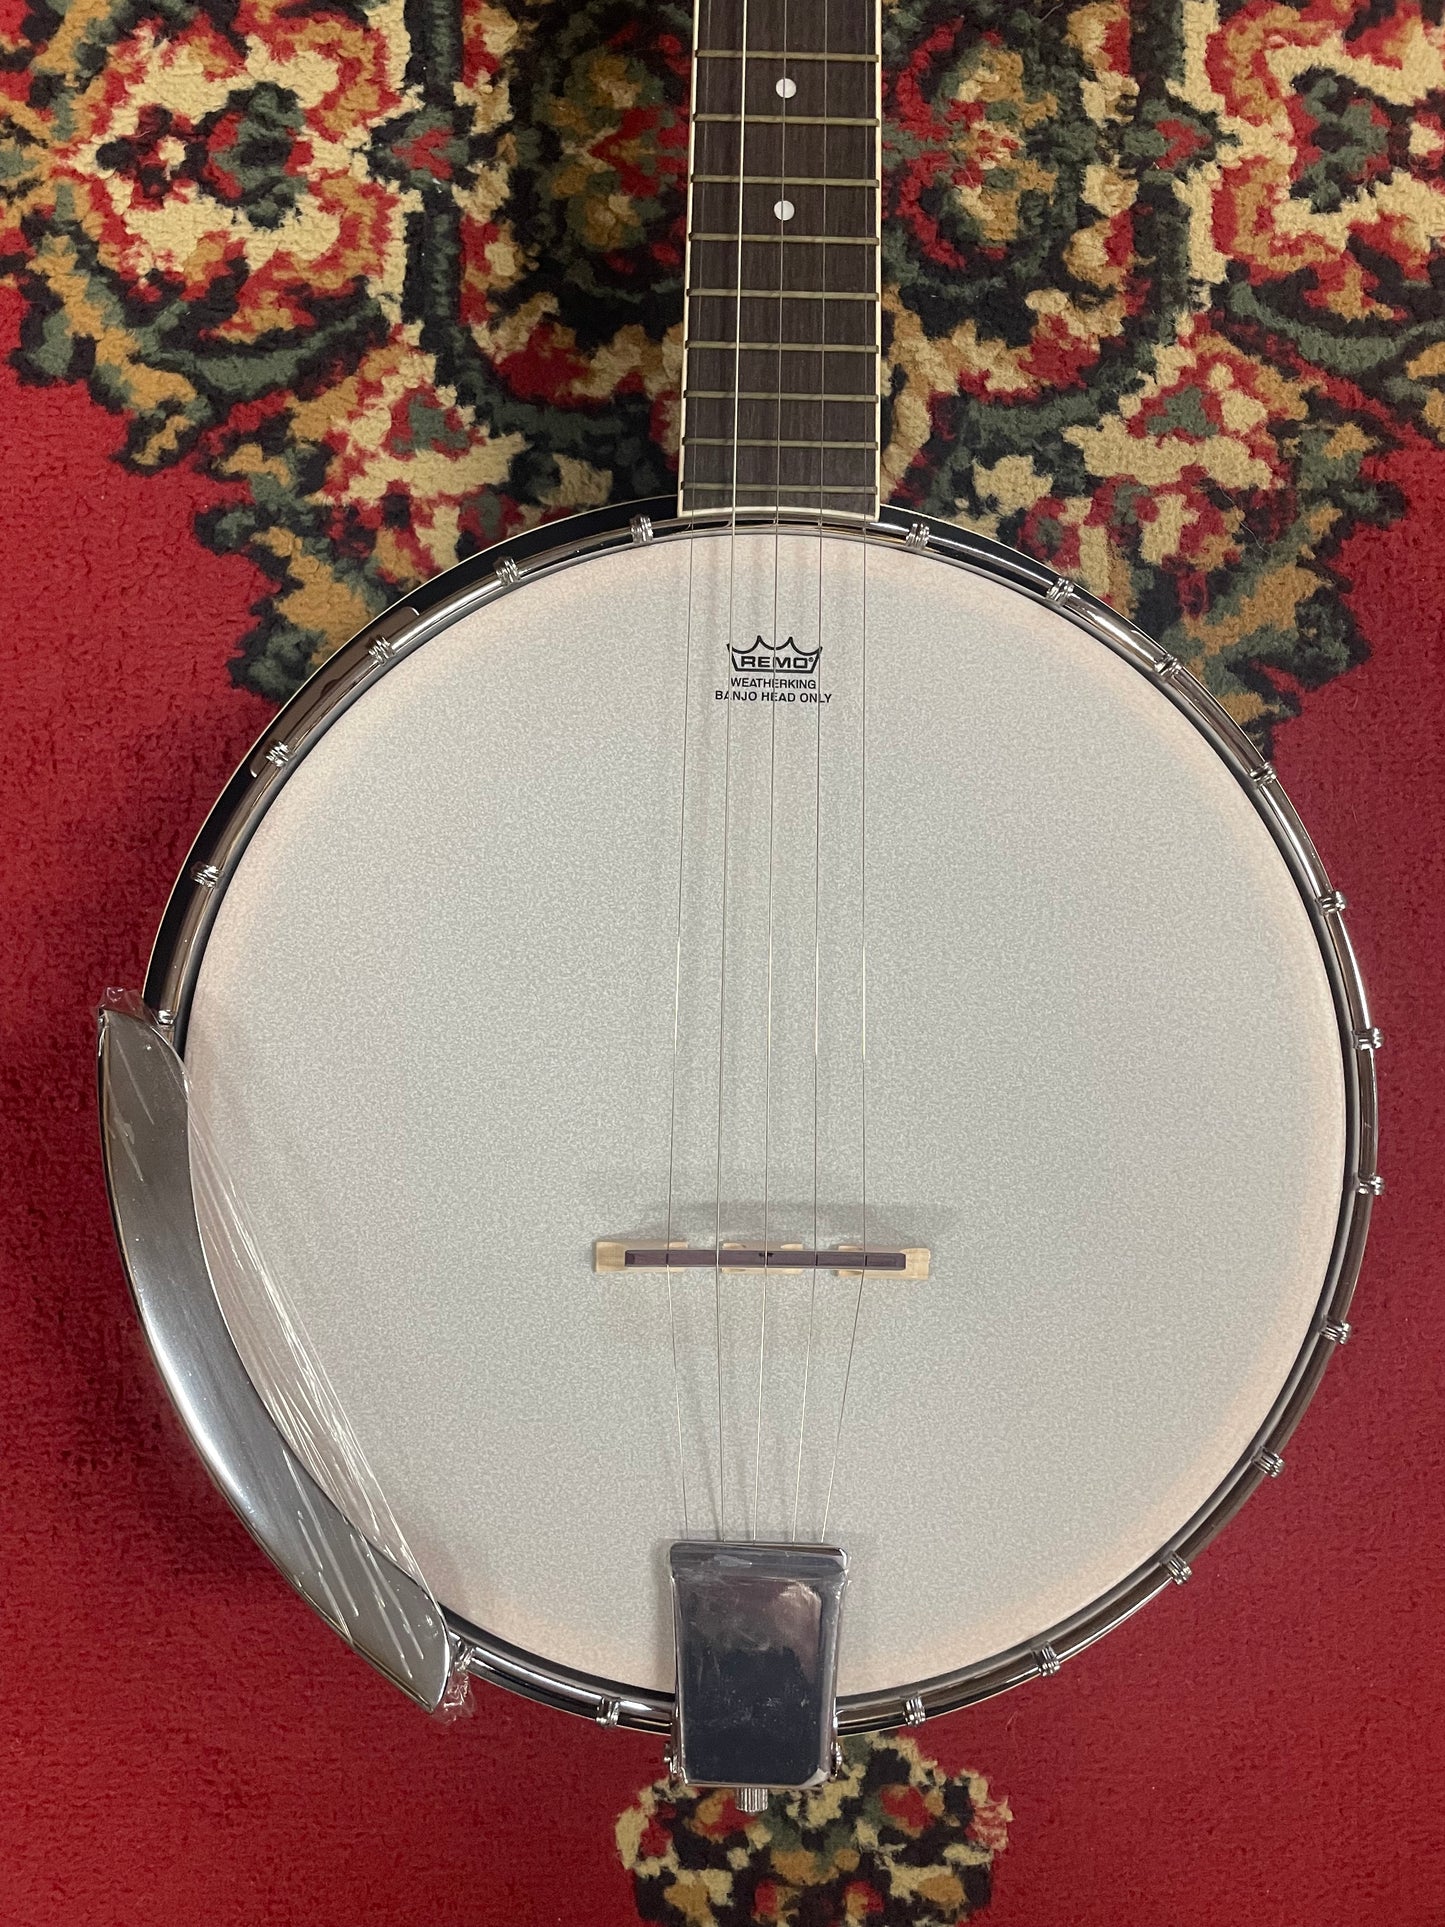 Bryden SBJ524 5 String Banjo